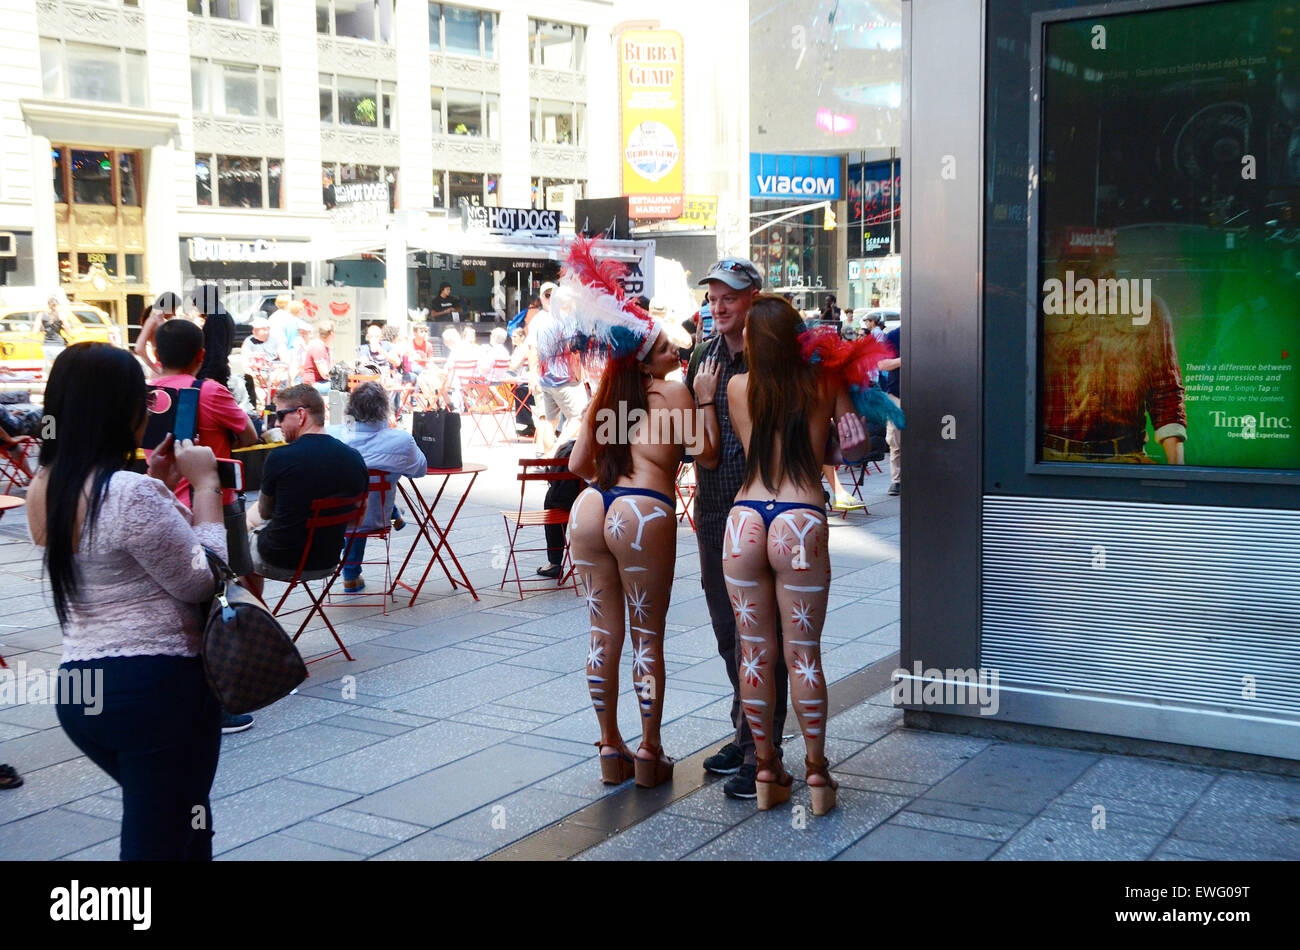 Stars And Stripes Körper Farbe Frauen mal Platz New York Usa Touristen Foto Stockfoto